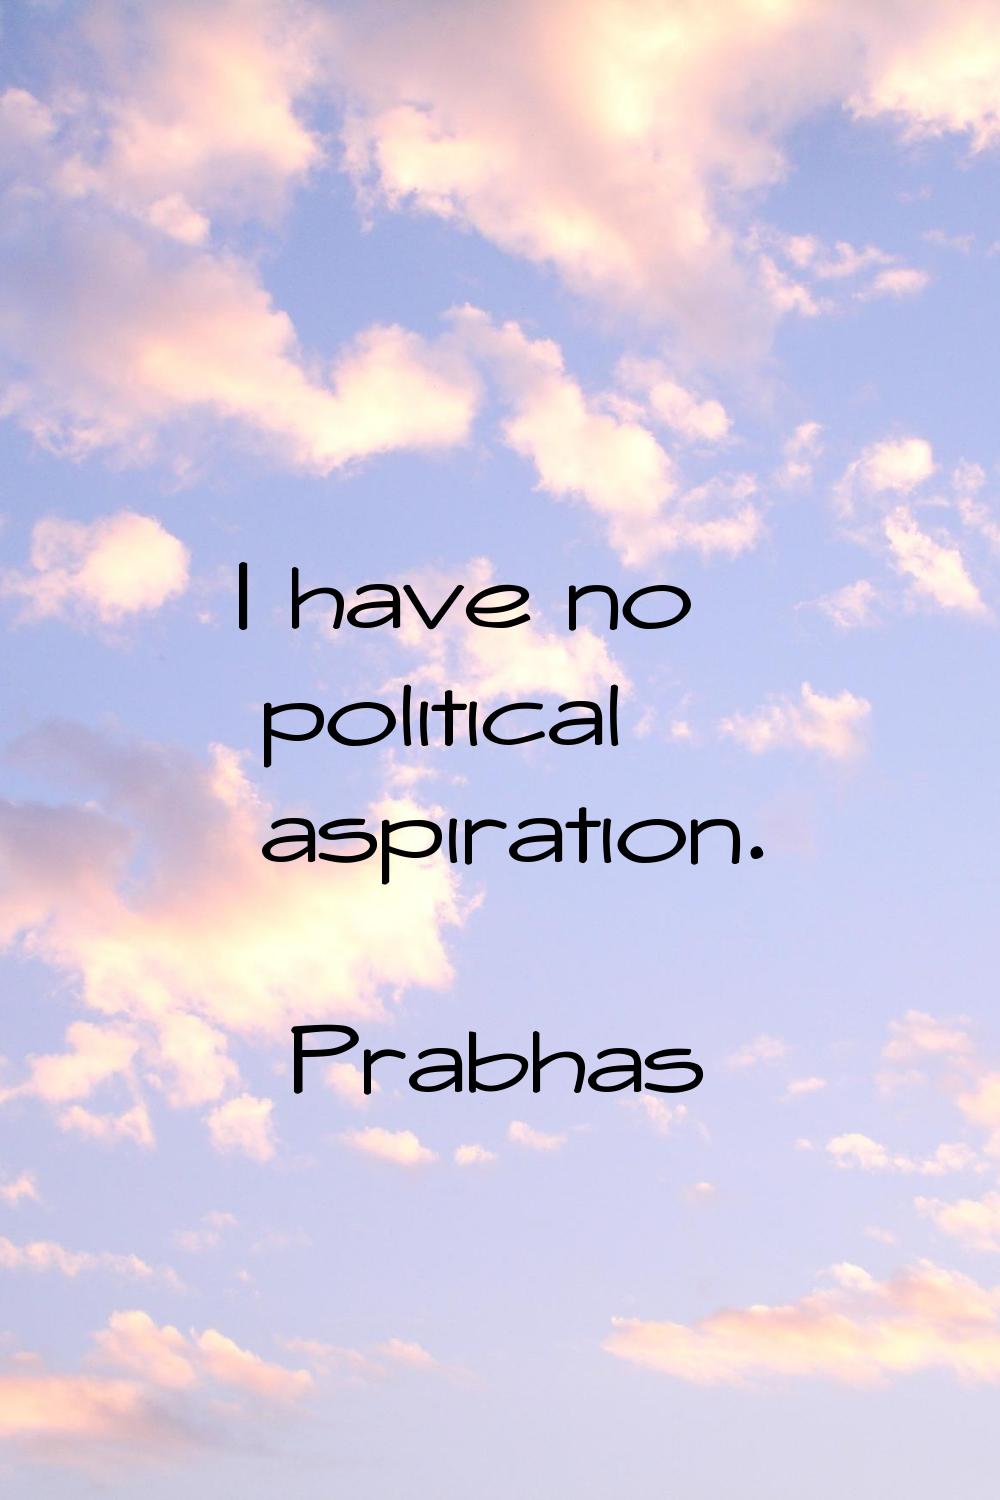 I have no political aspiration.